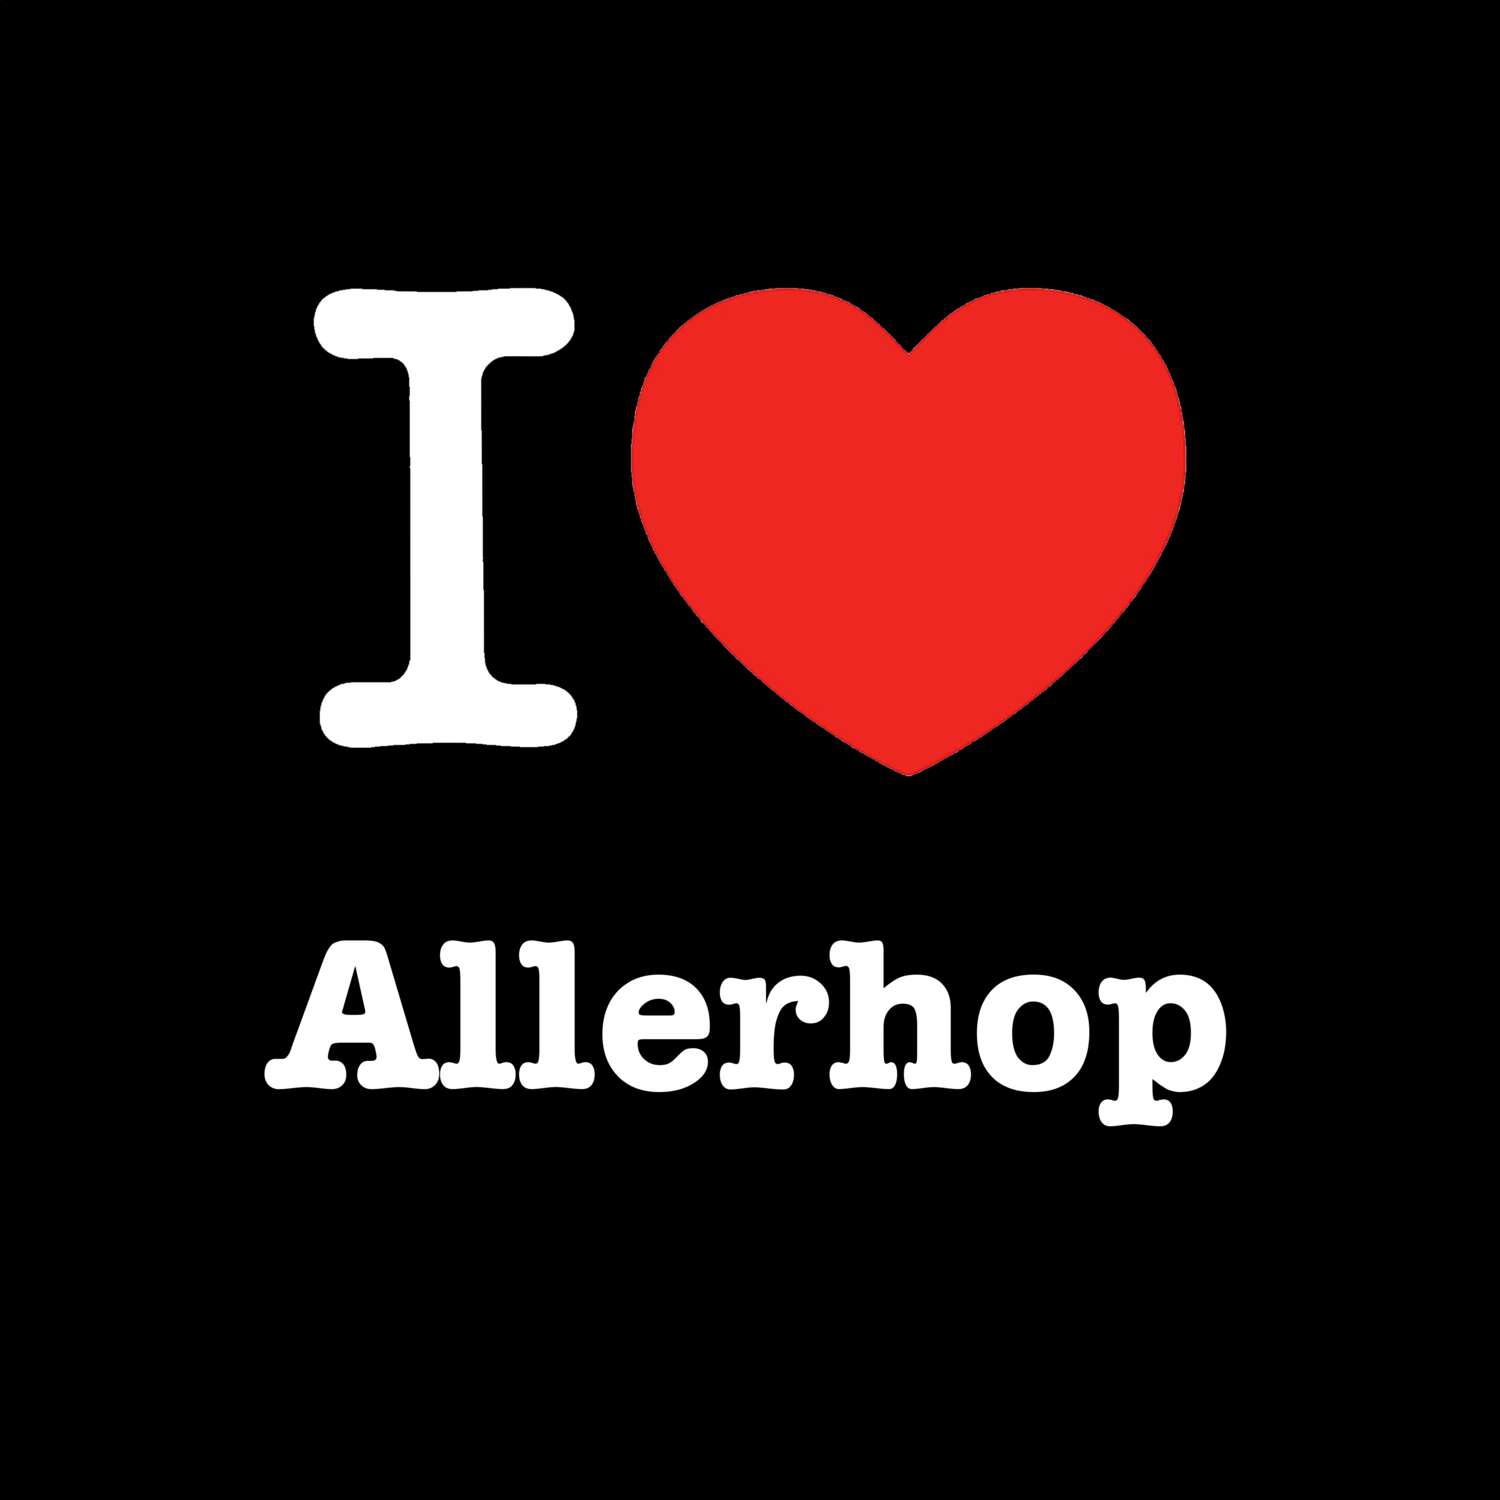 Allerhop T-Shirt »I love«